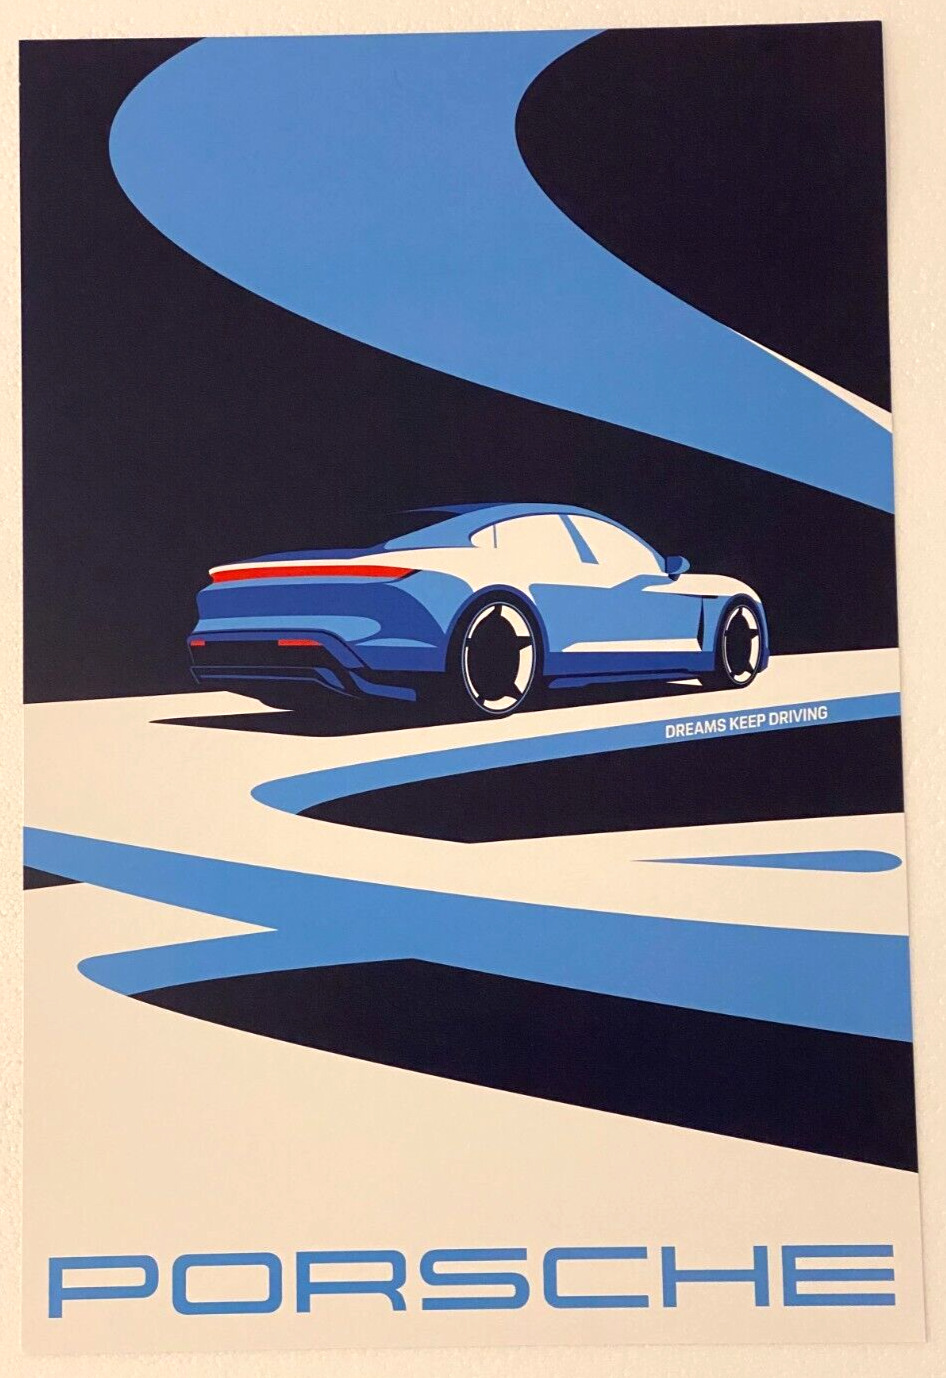 2021 Porsche Taycan Sedan Poster 24x16 Dreams Keep Driving